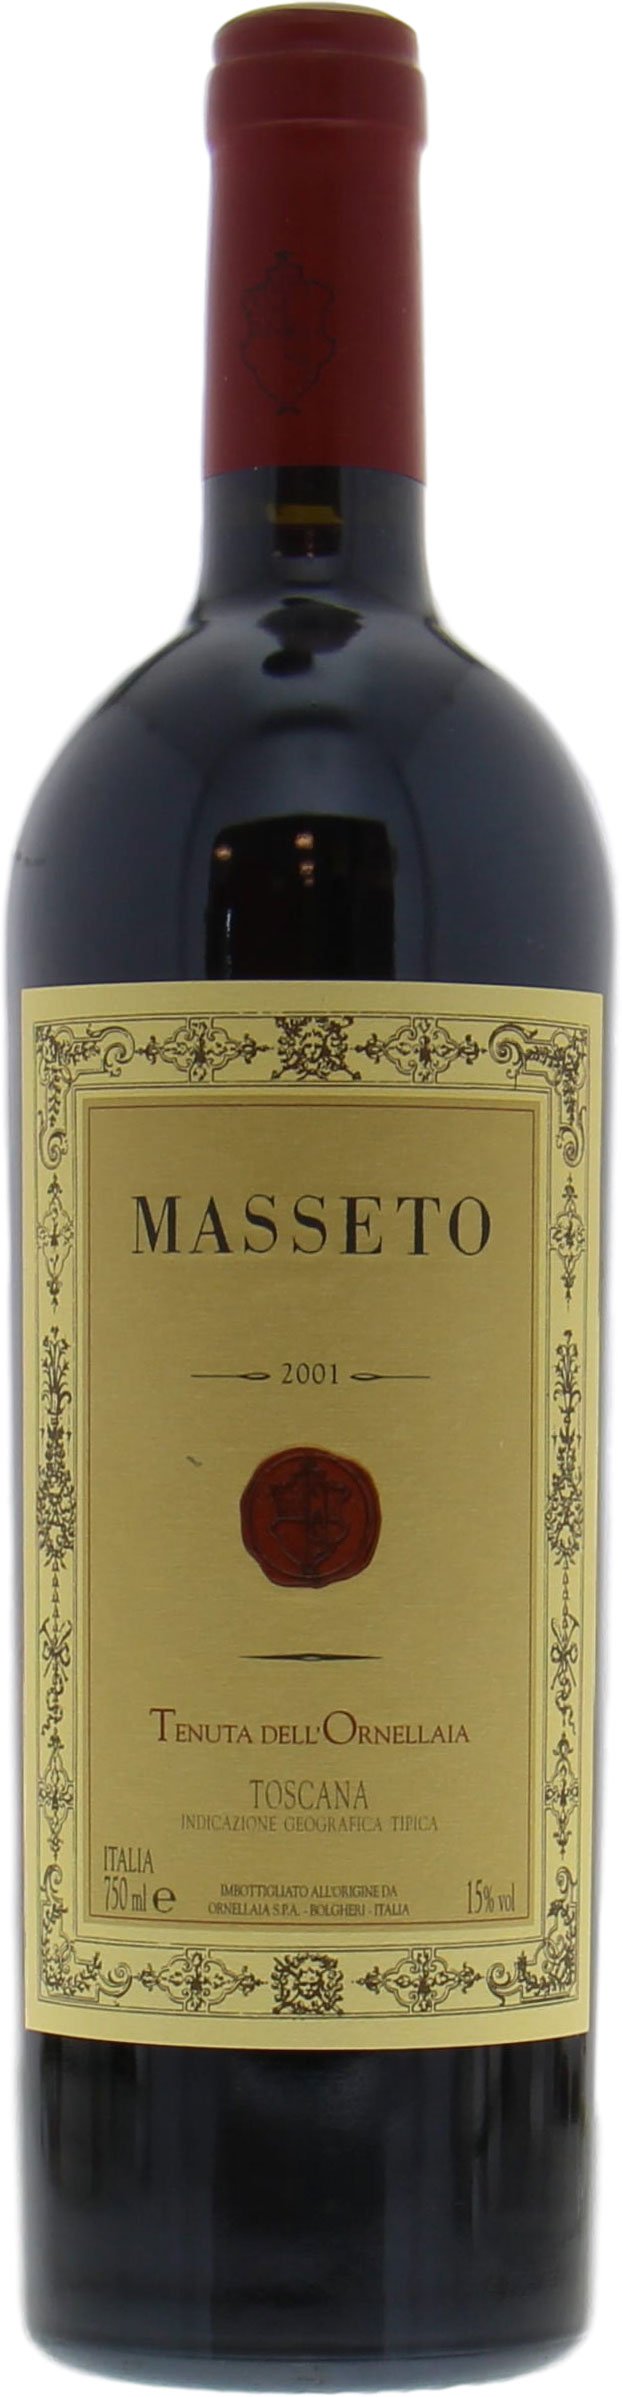 masseto wine alcohol percentage